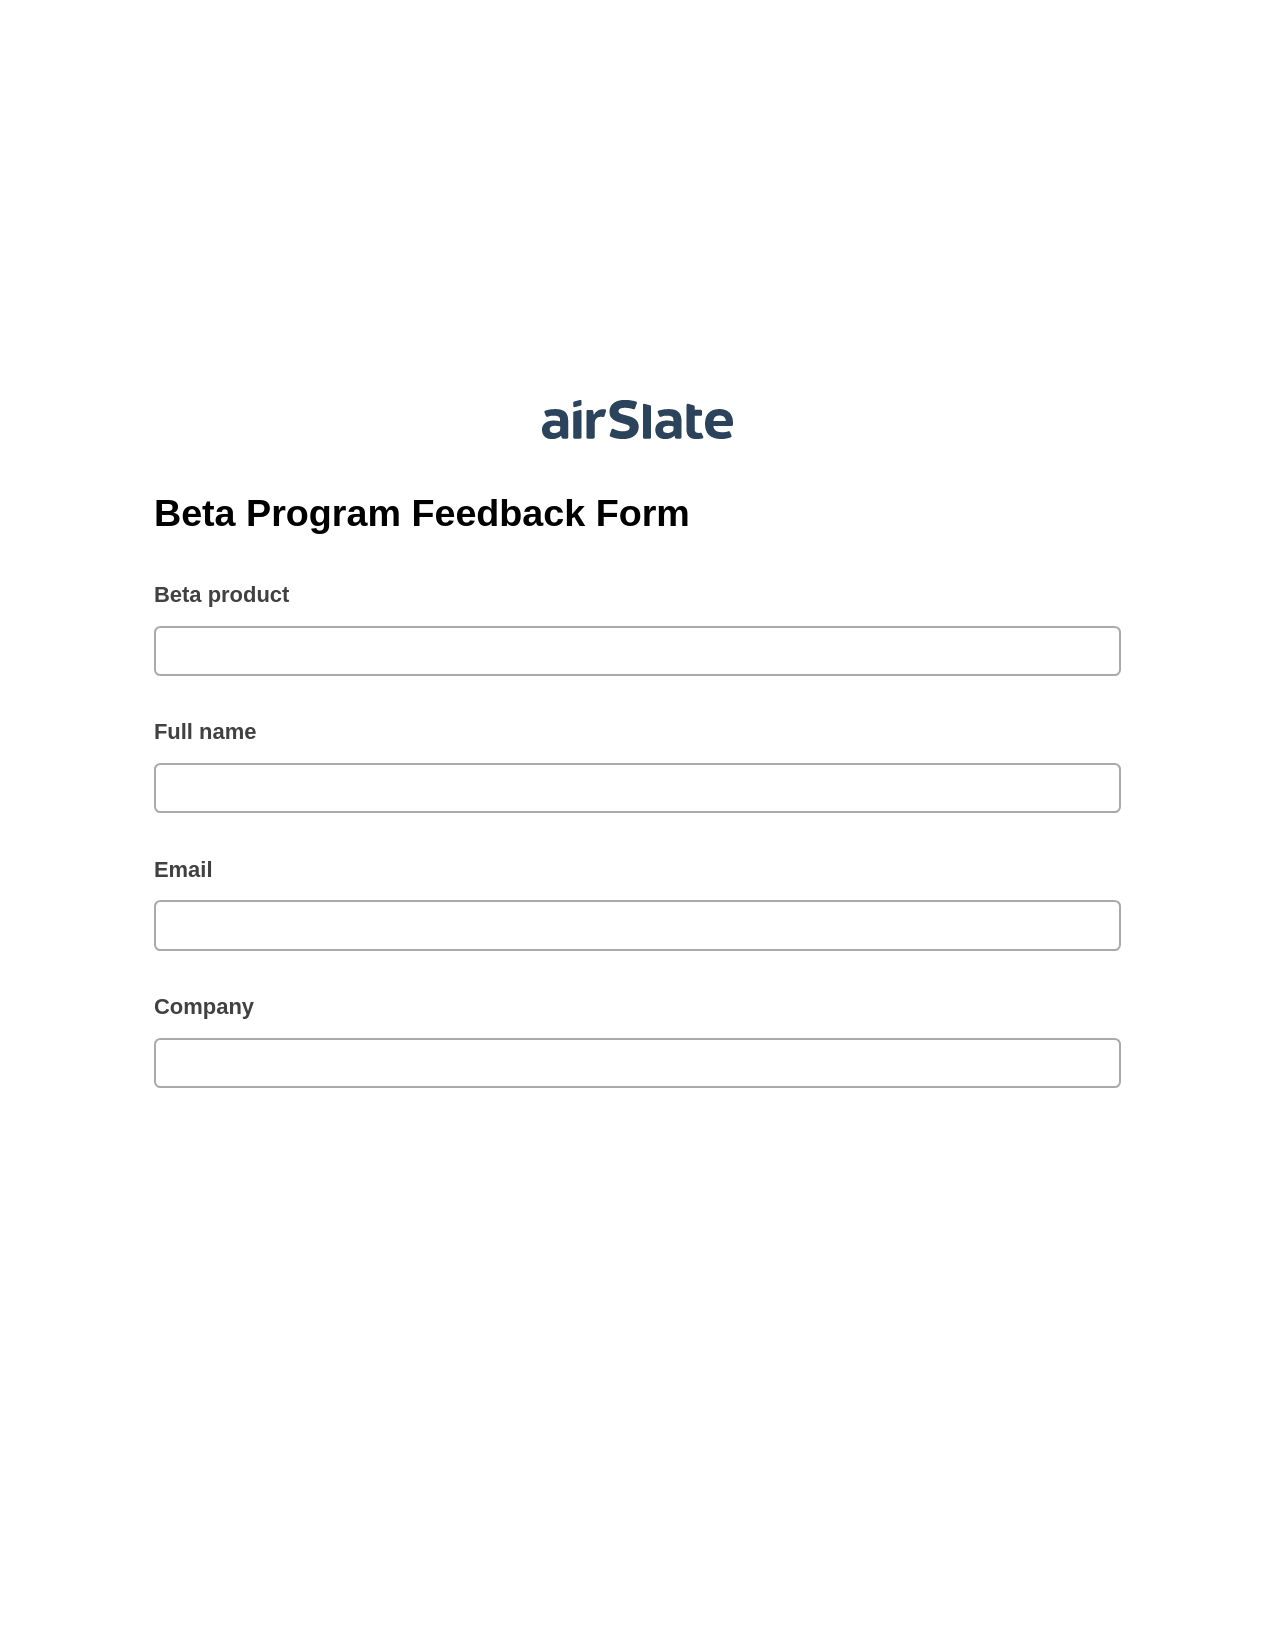 Beta Program Feedback Form Pre-fill Dropdowns from Google Sheet Bot, SendGrid send Campaign bot, Export to Excel 365 Bot